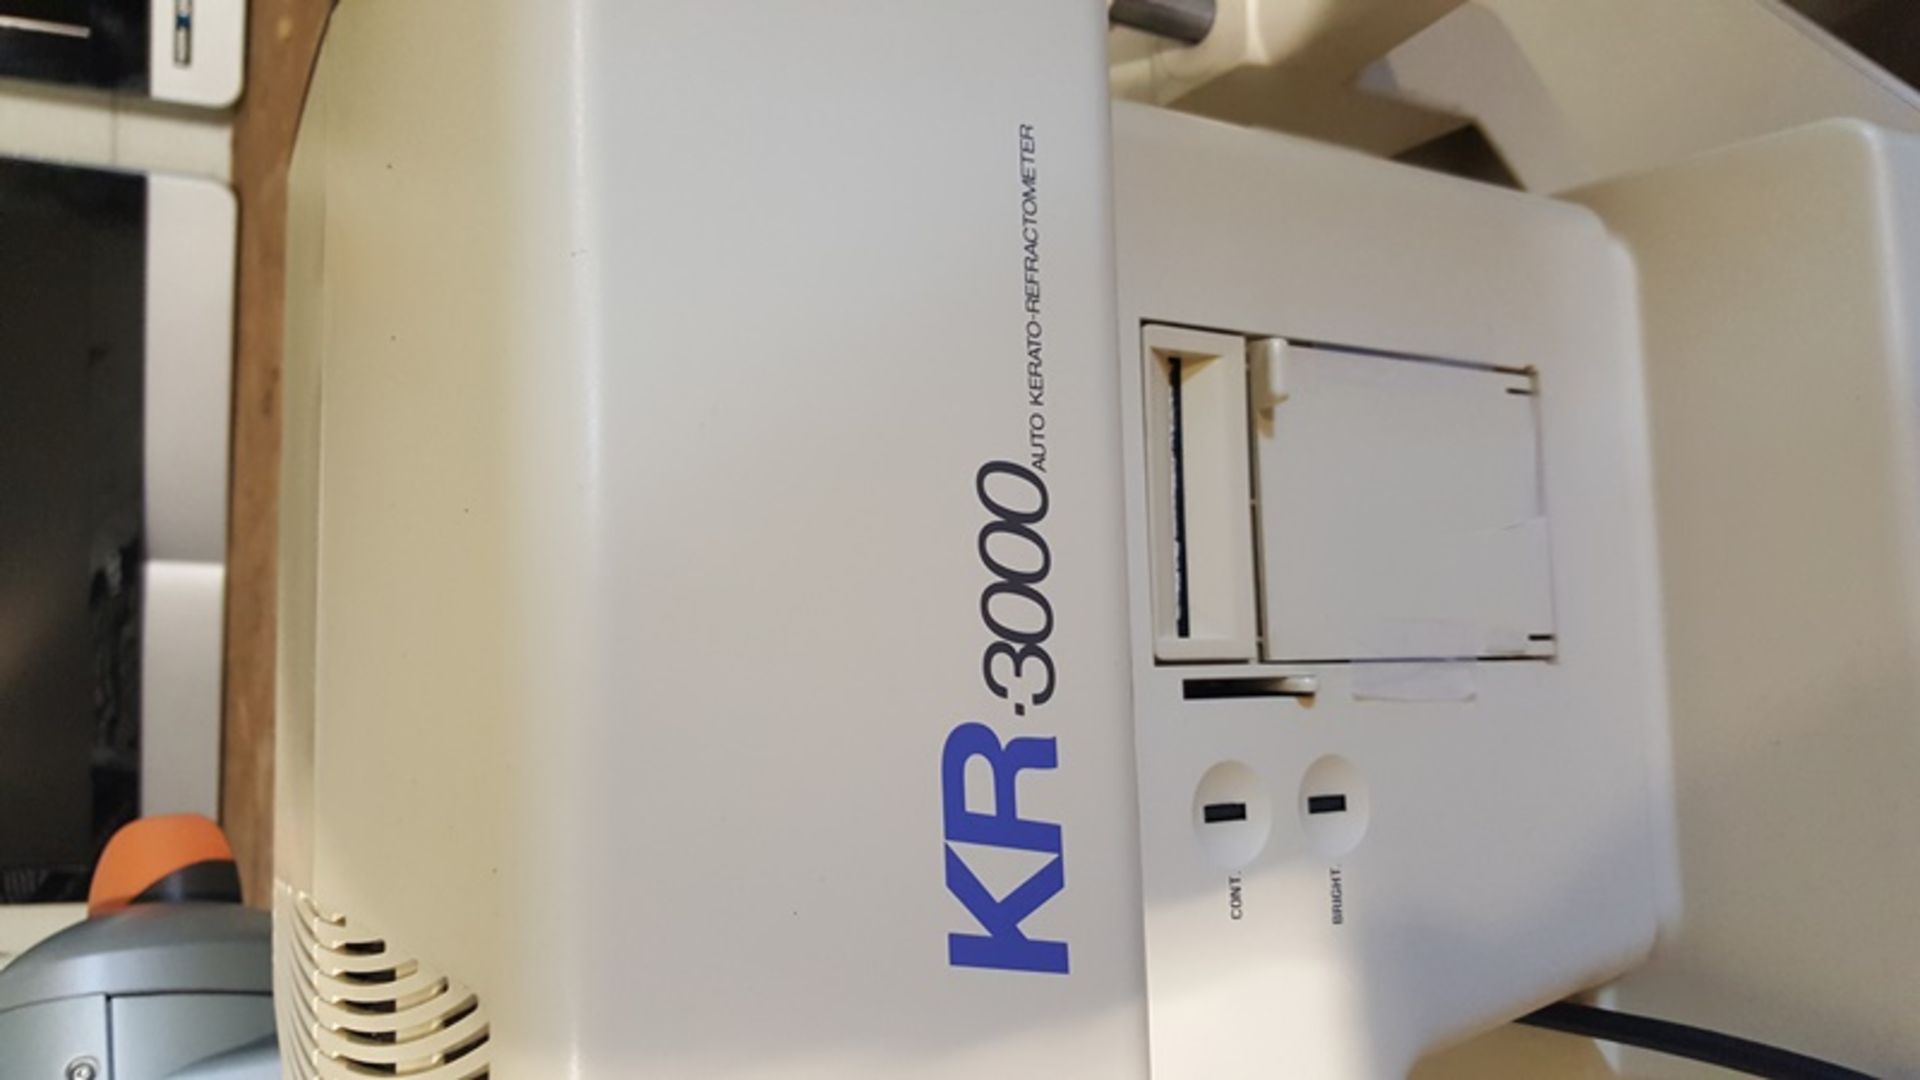 Top Con KR-3000 Auto-Kerato-Refractometer ser# KA2360ser# KA2360 - Image 2 of 3